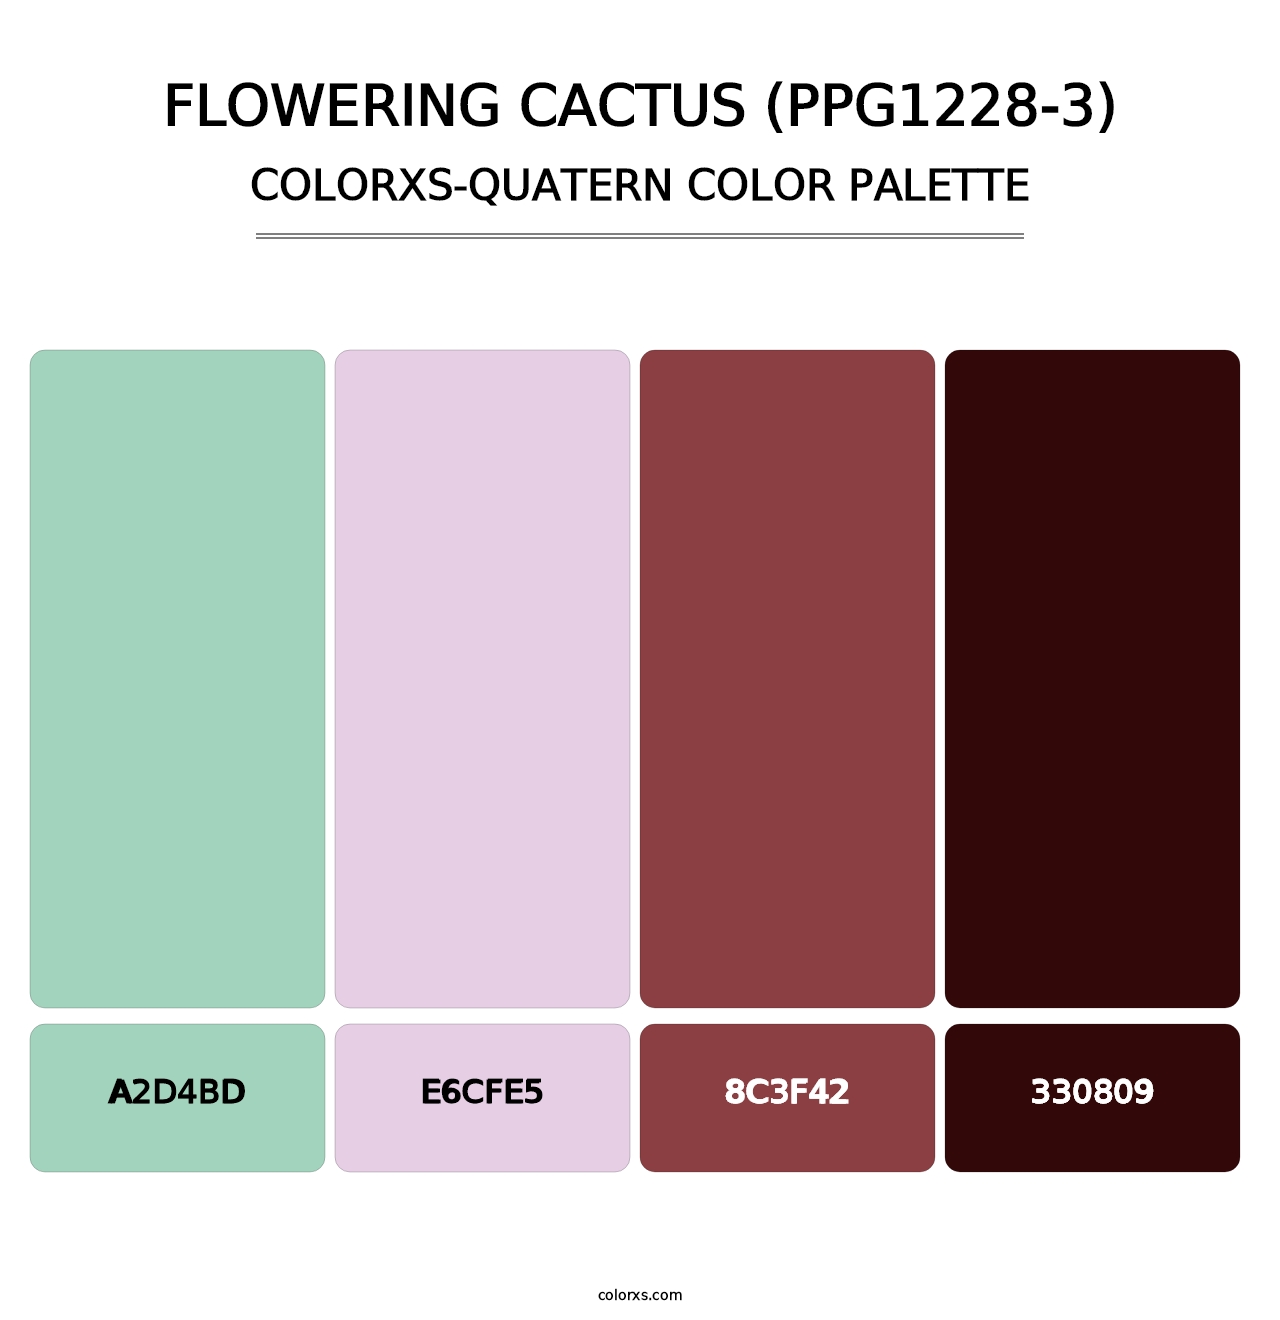 Flowering Cactus (PPG1228-3) - Colorxs Quatern Palette